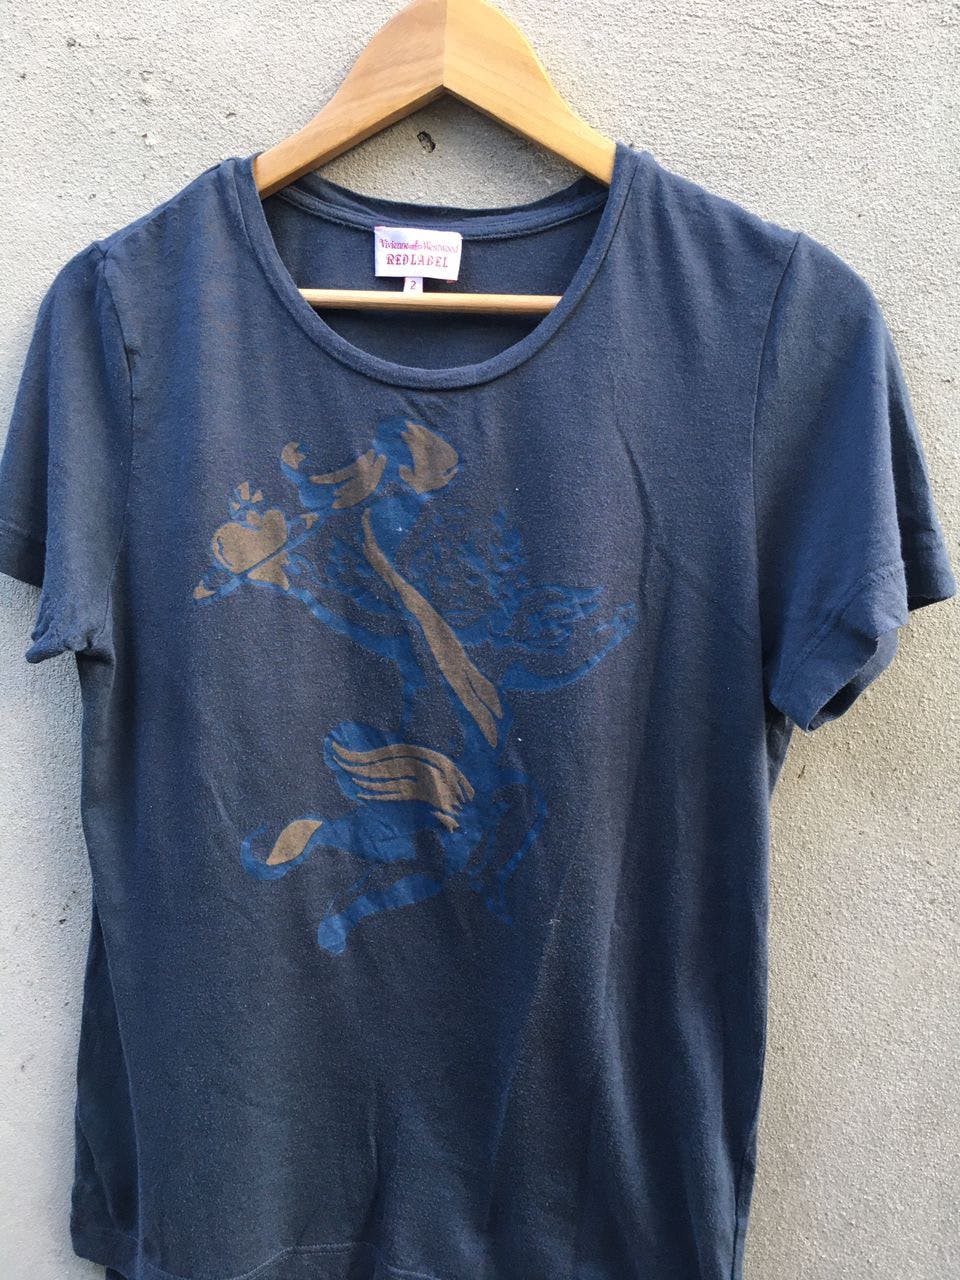 Vivienne Westwood blue navy T shirt - 2